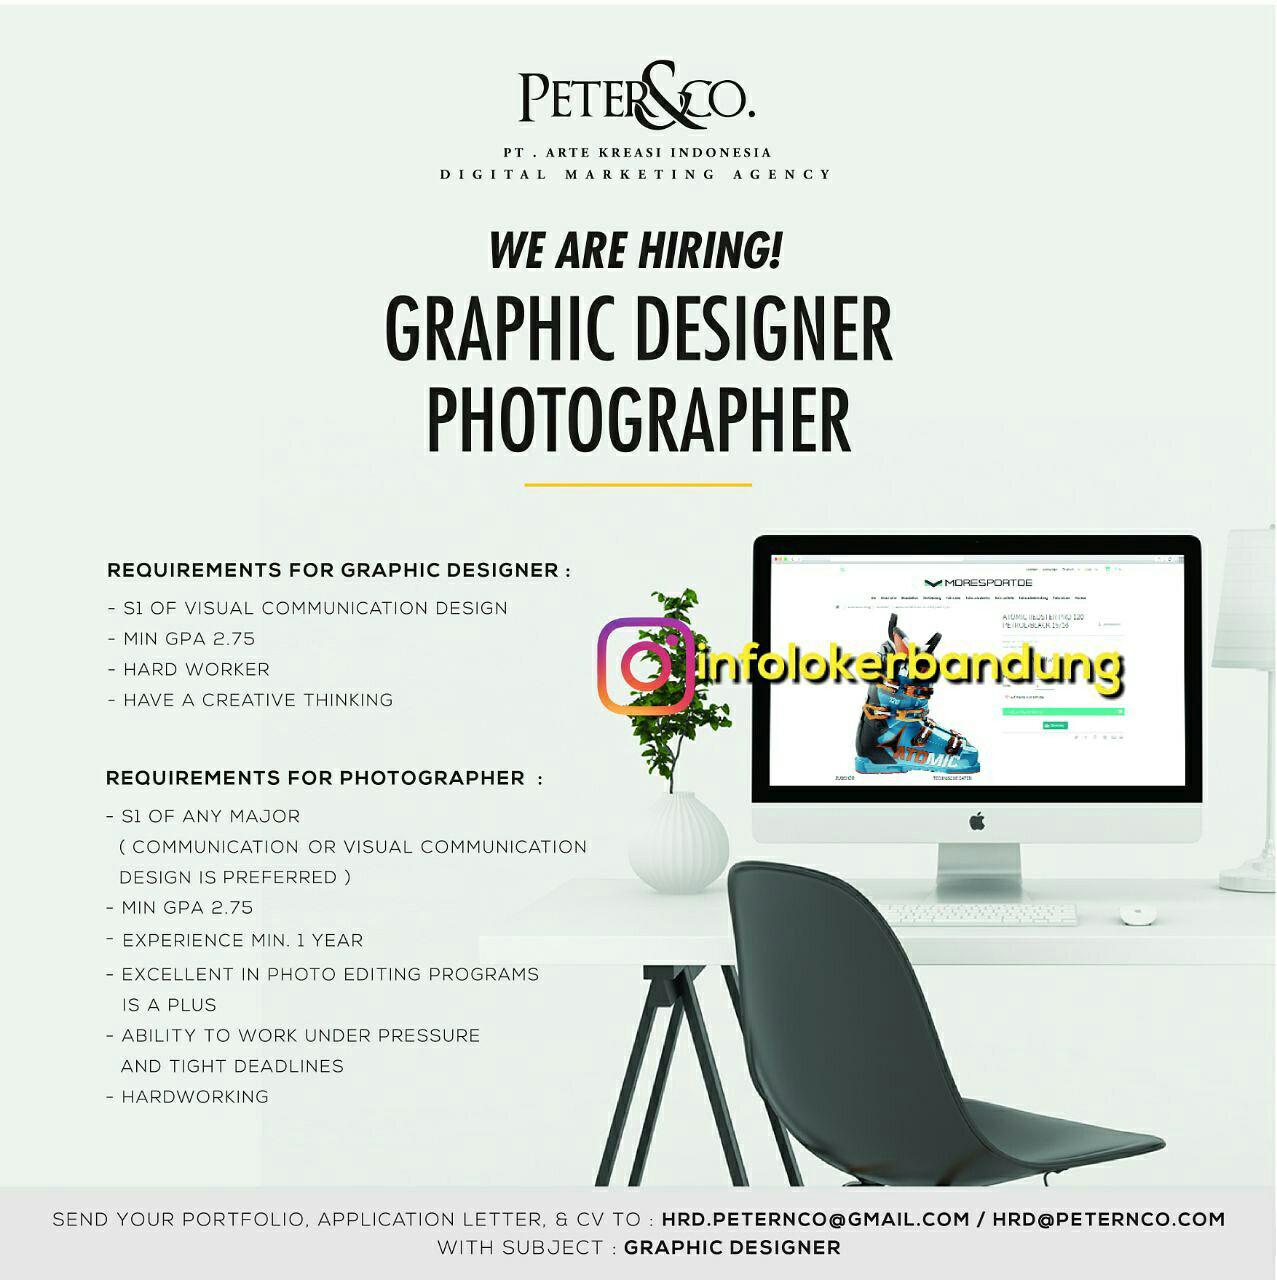 Lowongan Kerja Graphic Deigner & Photographer PT. Arte Kreasi Indoensia ( Peter&Co) September 2017